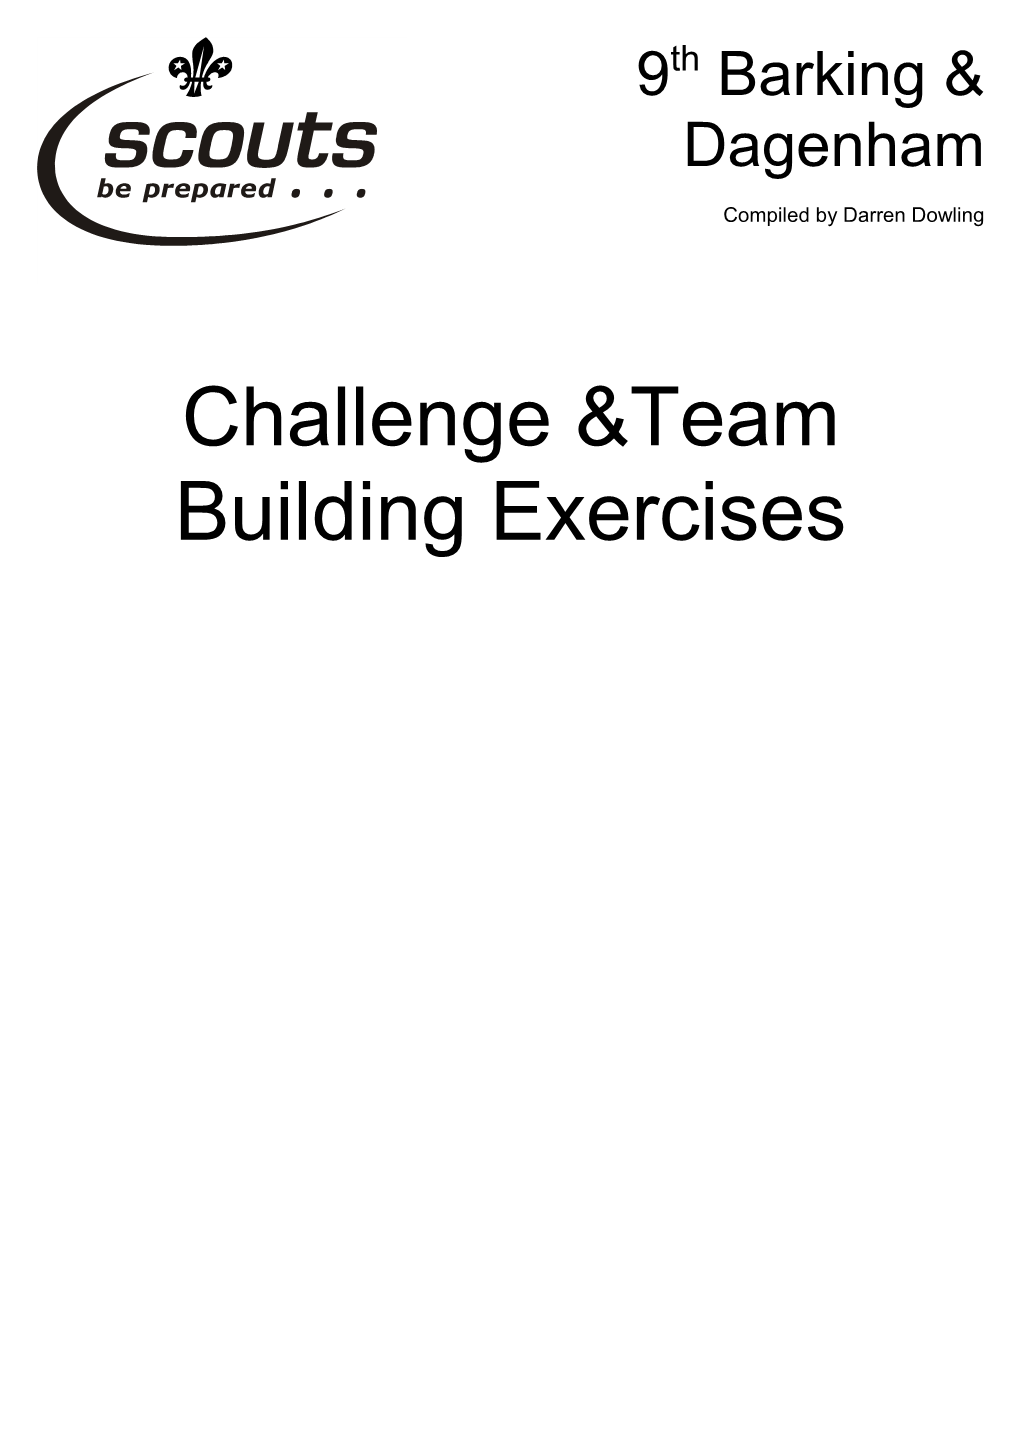 Challenge &Team Building Exercises